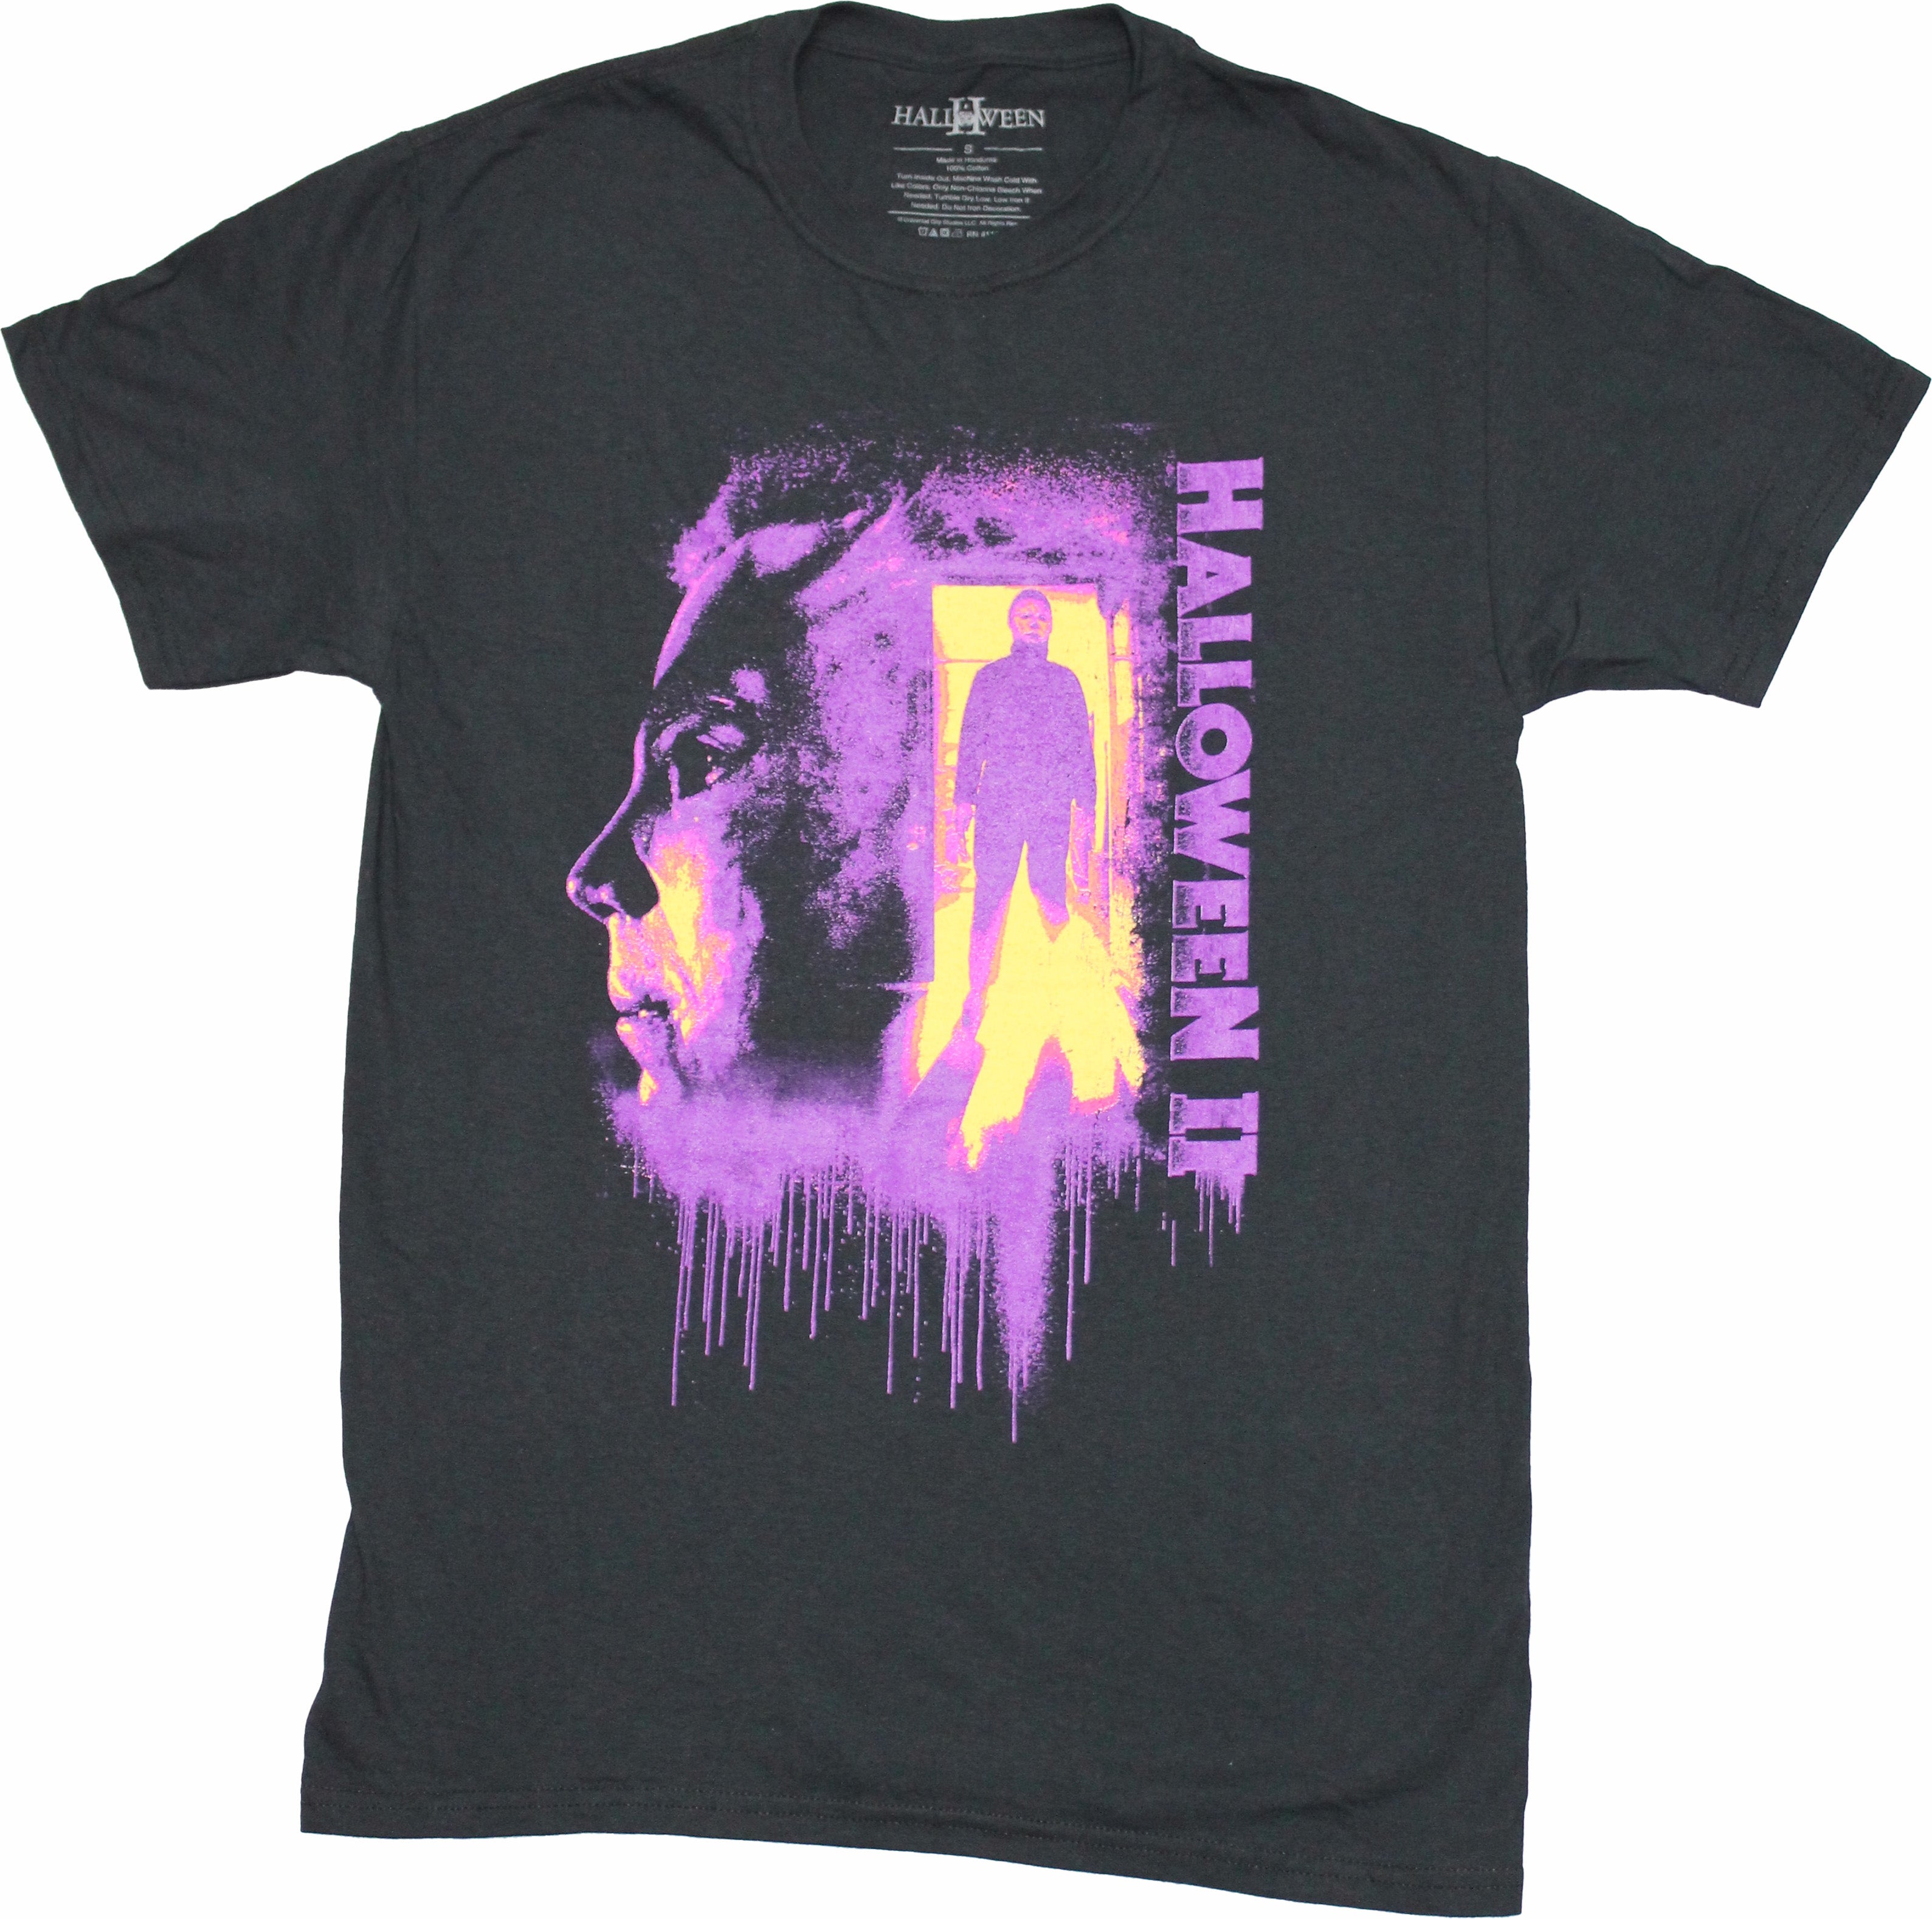 Halloween Mens T-Shirt - Purple Tint Michael Myers Poster Image